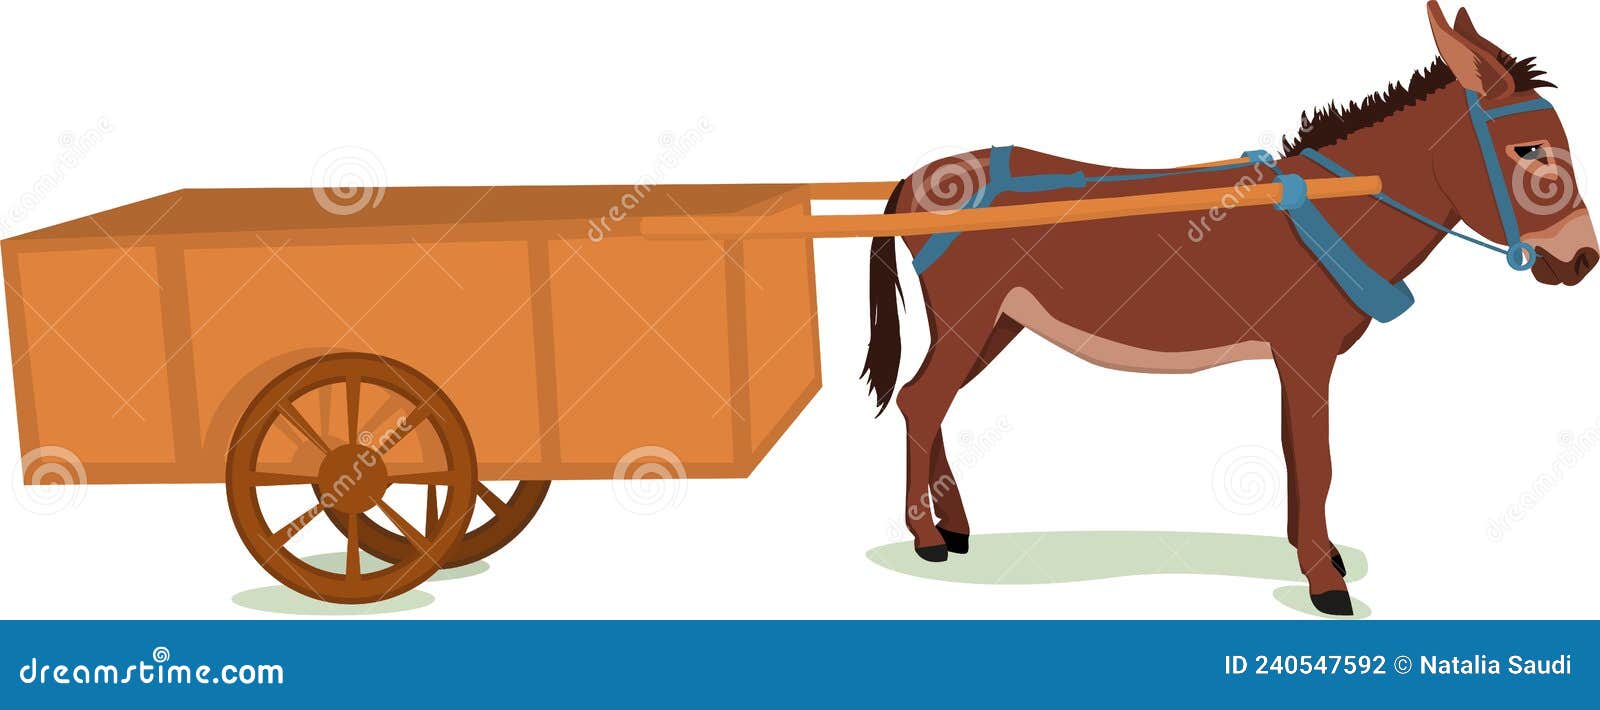 Mule Transport Morocco Stock Illustrations – 1 Mule Transport Morocco ...